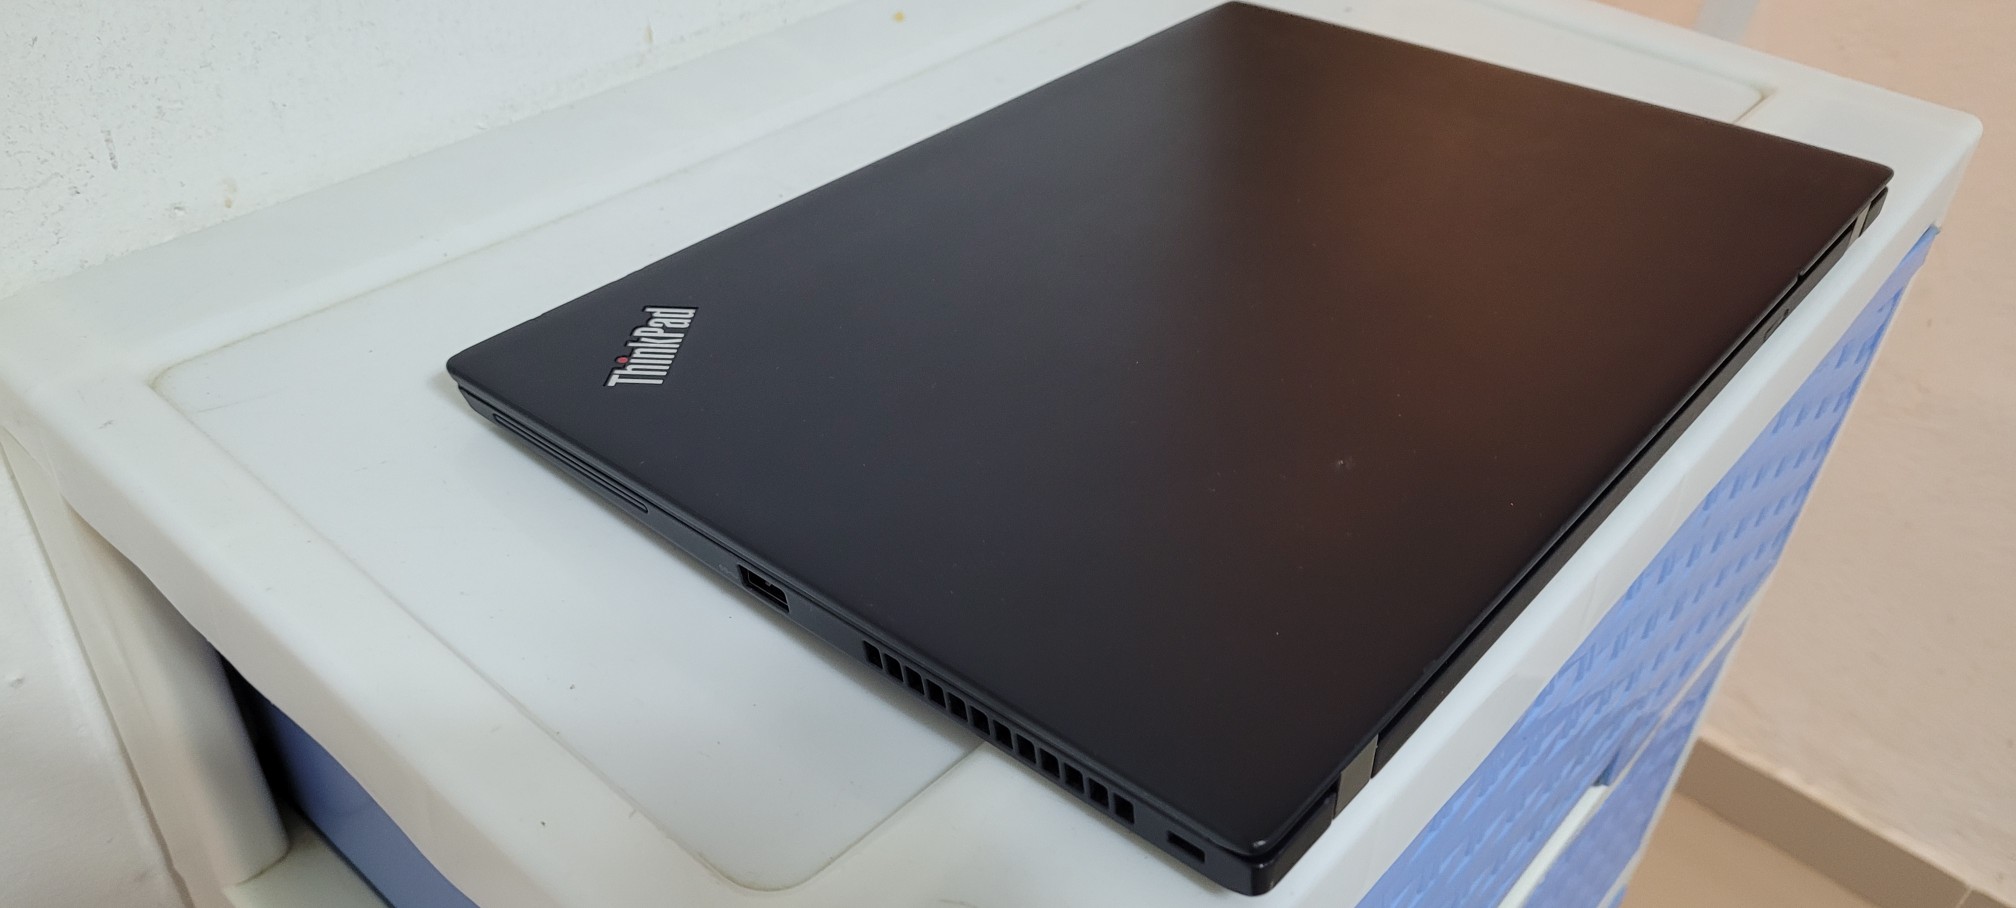 computadoras y laptops - Lenovo T460s 14 Pulg Core i5 6ta Ram 8gb DDR4 Disco 256gb SSD Wifi bluetoth 2